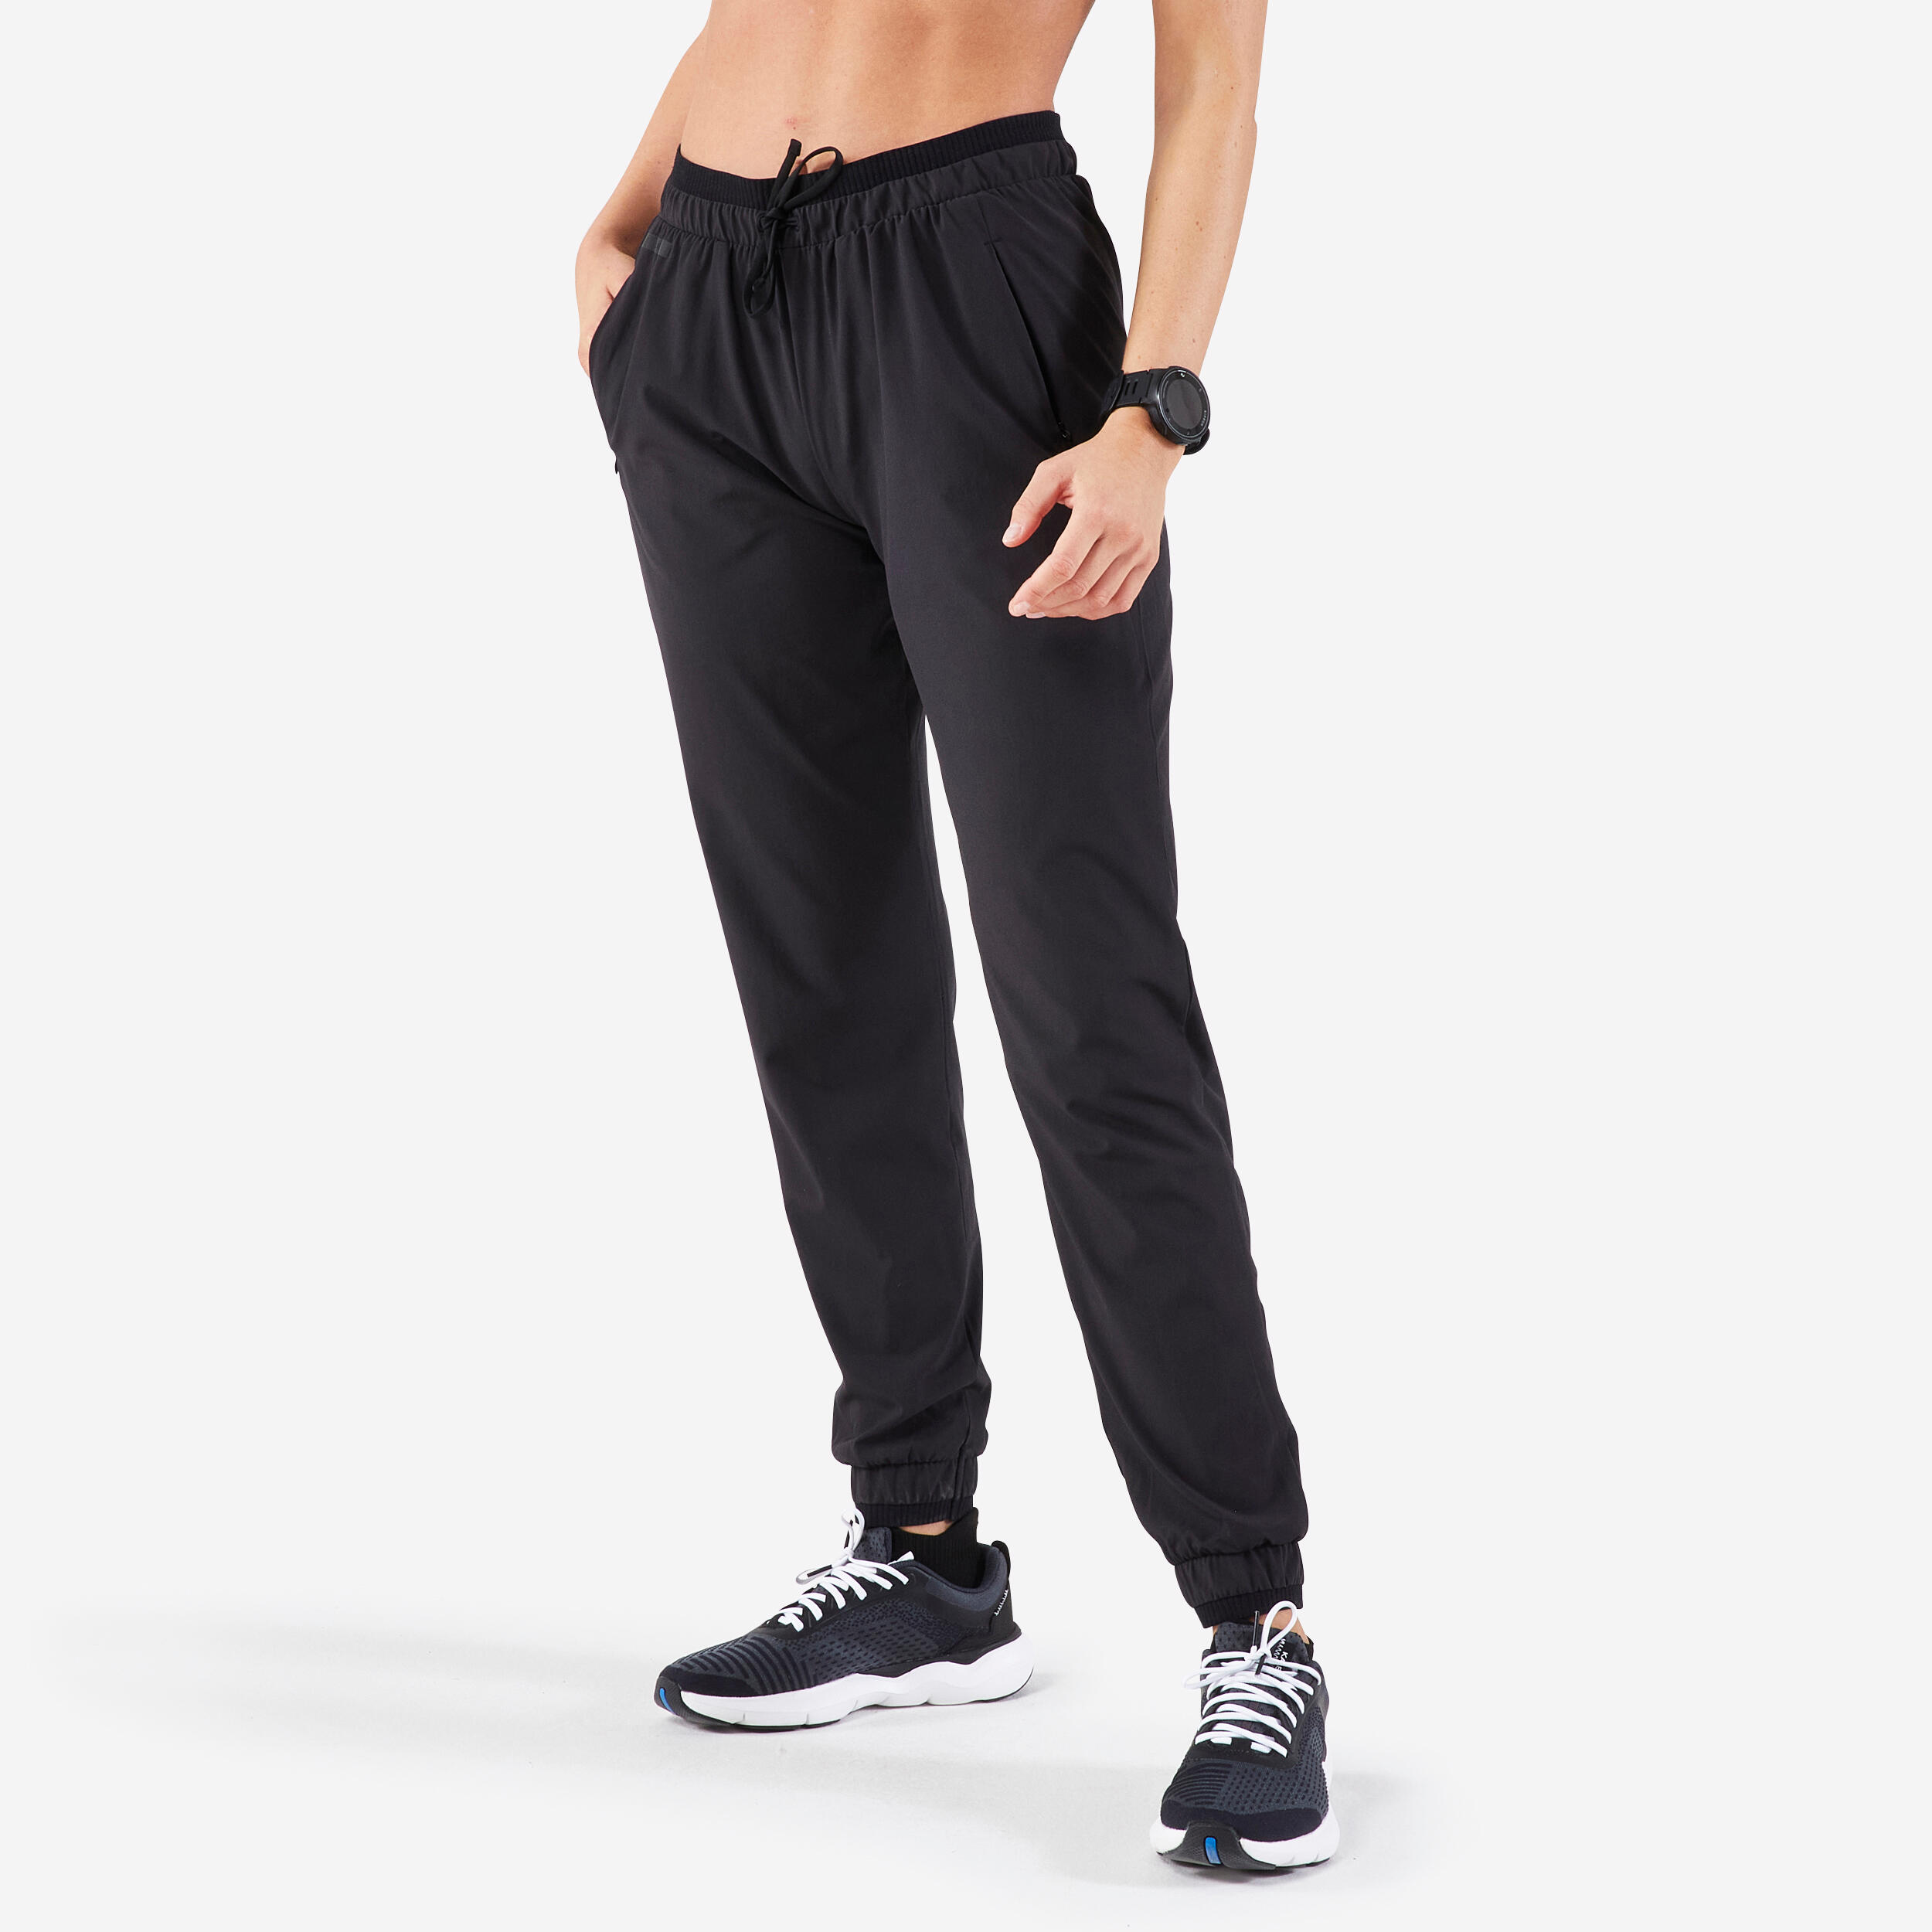 Women's Breathable Jogging Pants – Run Dry Black - Black - Kalenji -  Decathlon